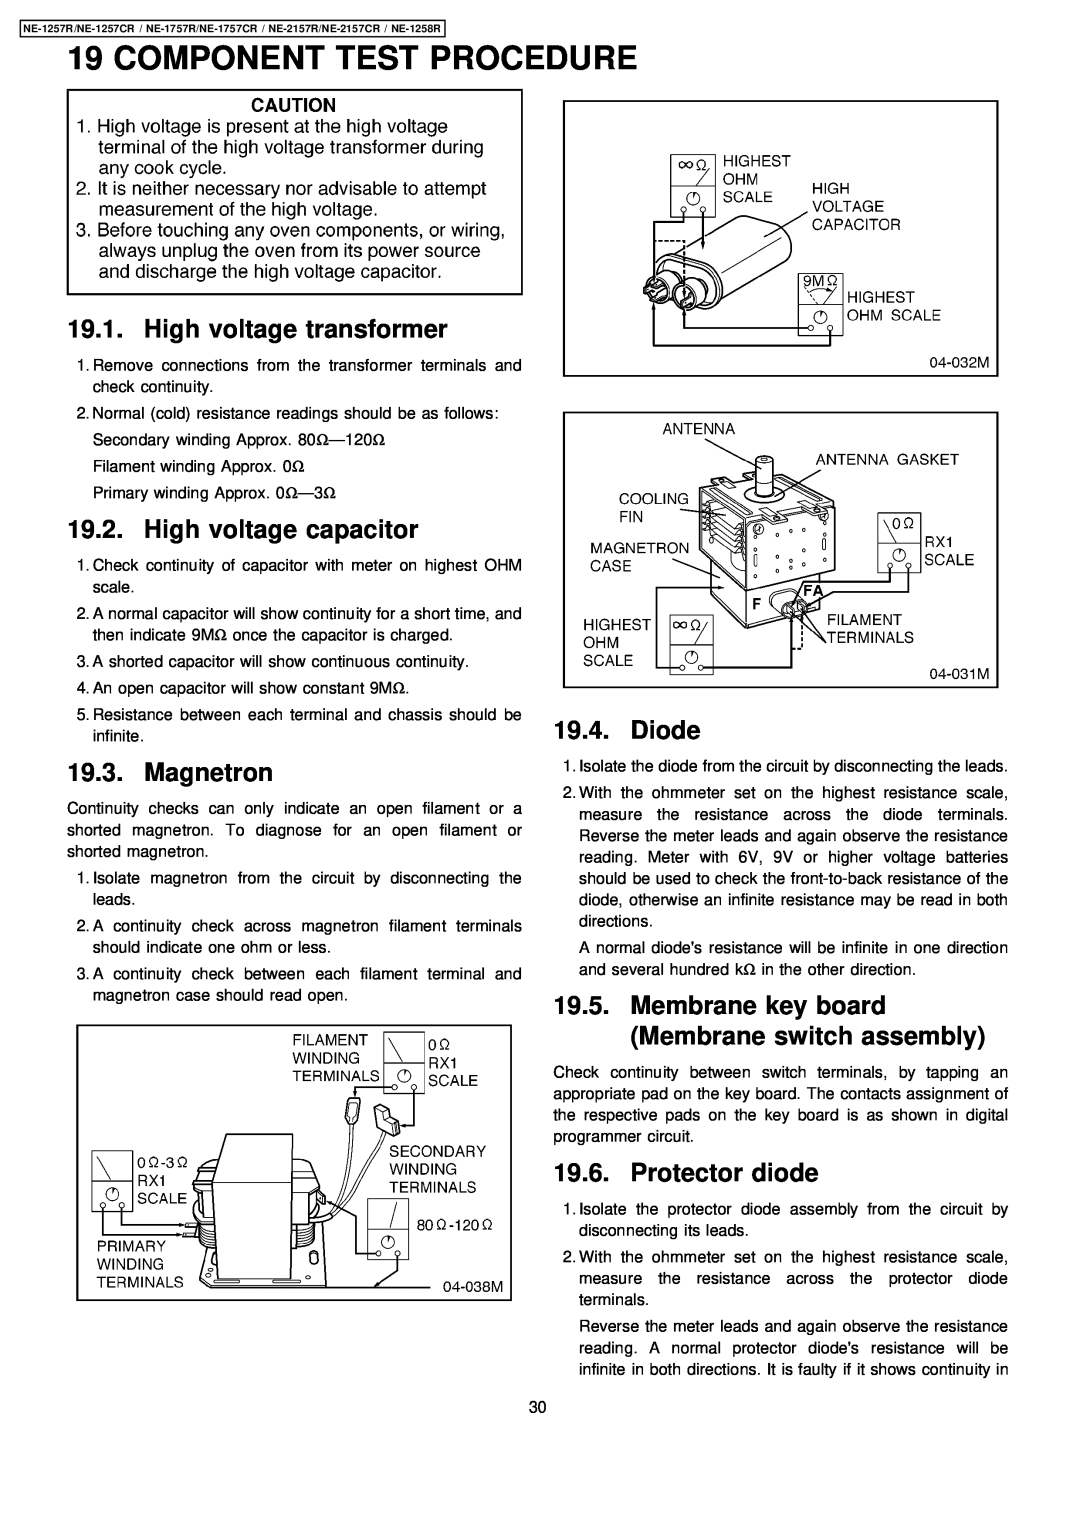 Panasonic NE-2157CR manual Component Test Procedure, High voltage transformer, High voltage capacitor, Magnetron, Diode 